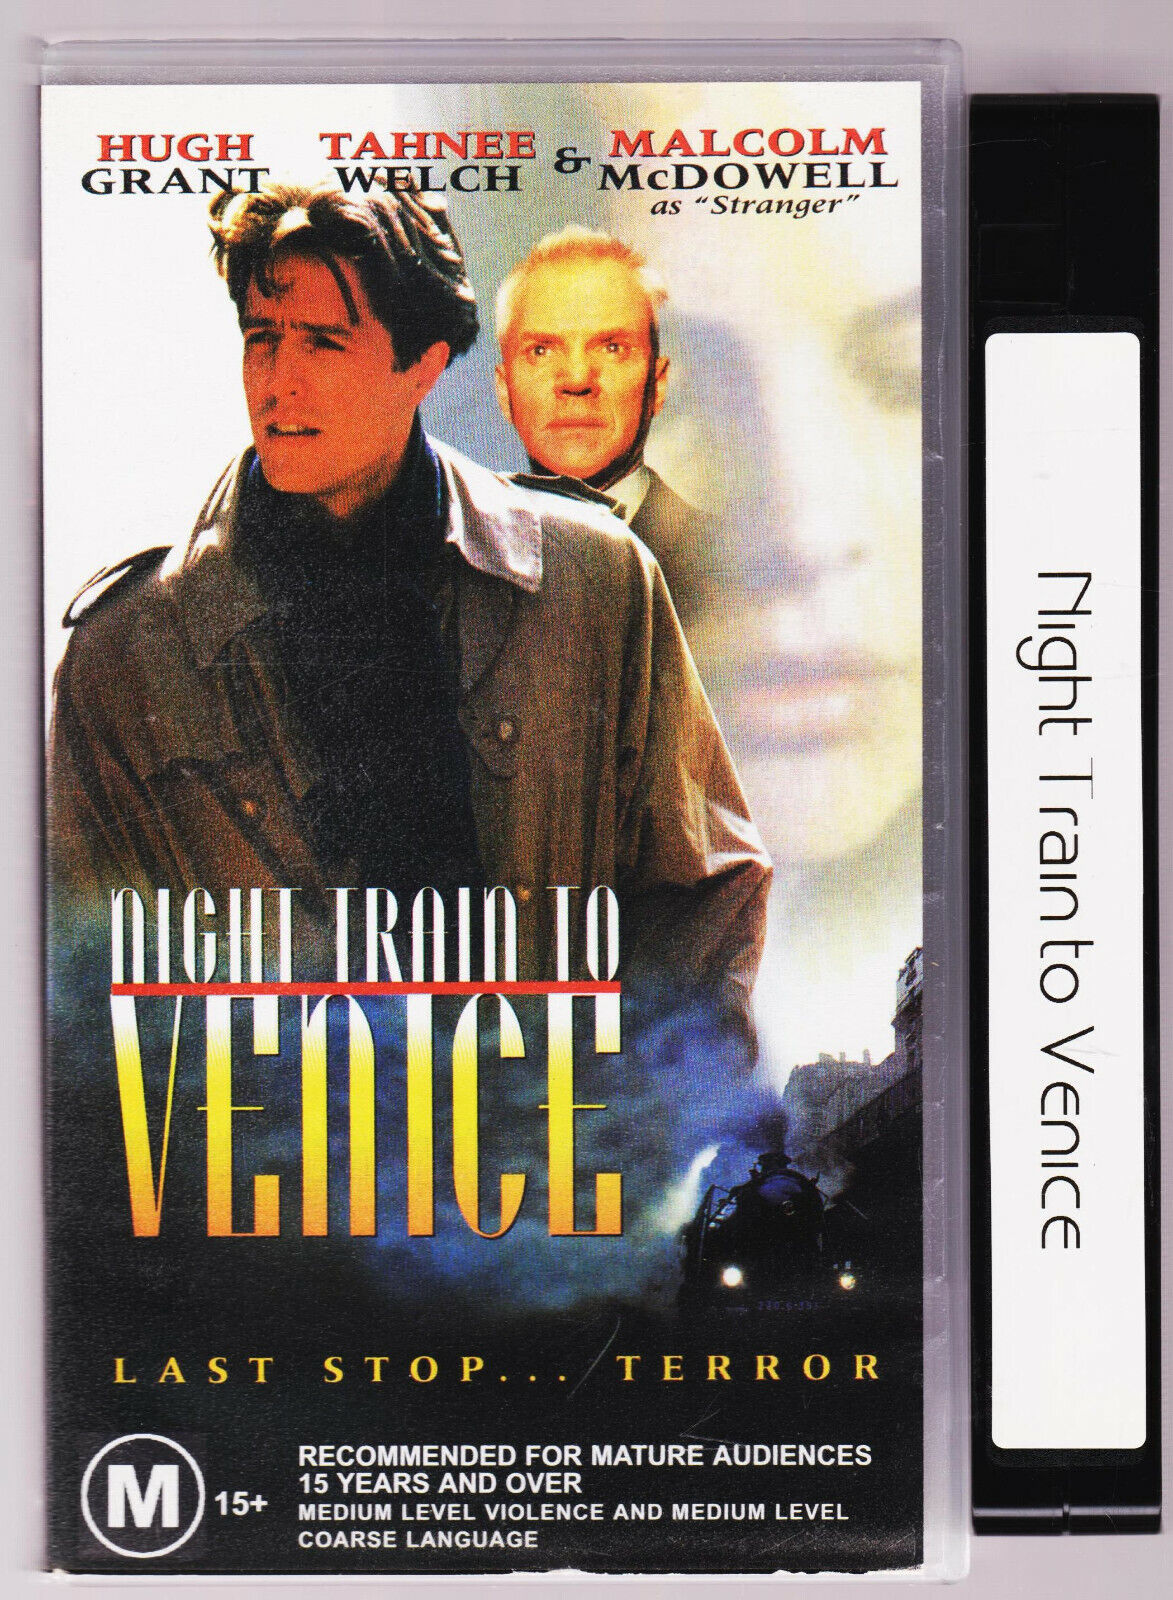 NIGHT TRAIN TO VENICE - HUGH GRANT - Vintage VHS VIDEO TAPE